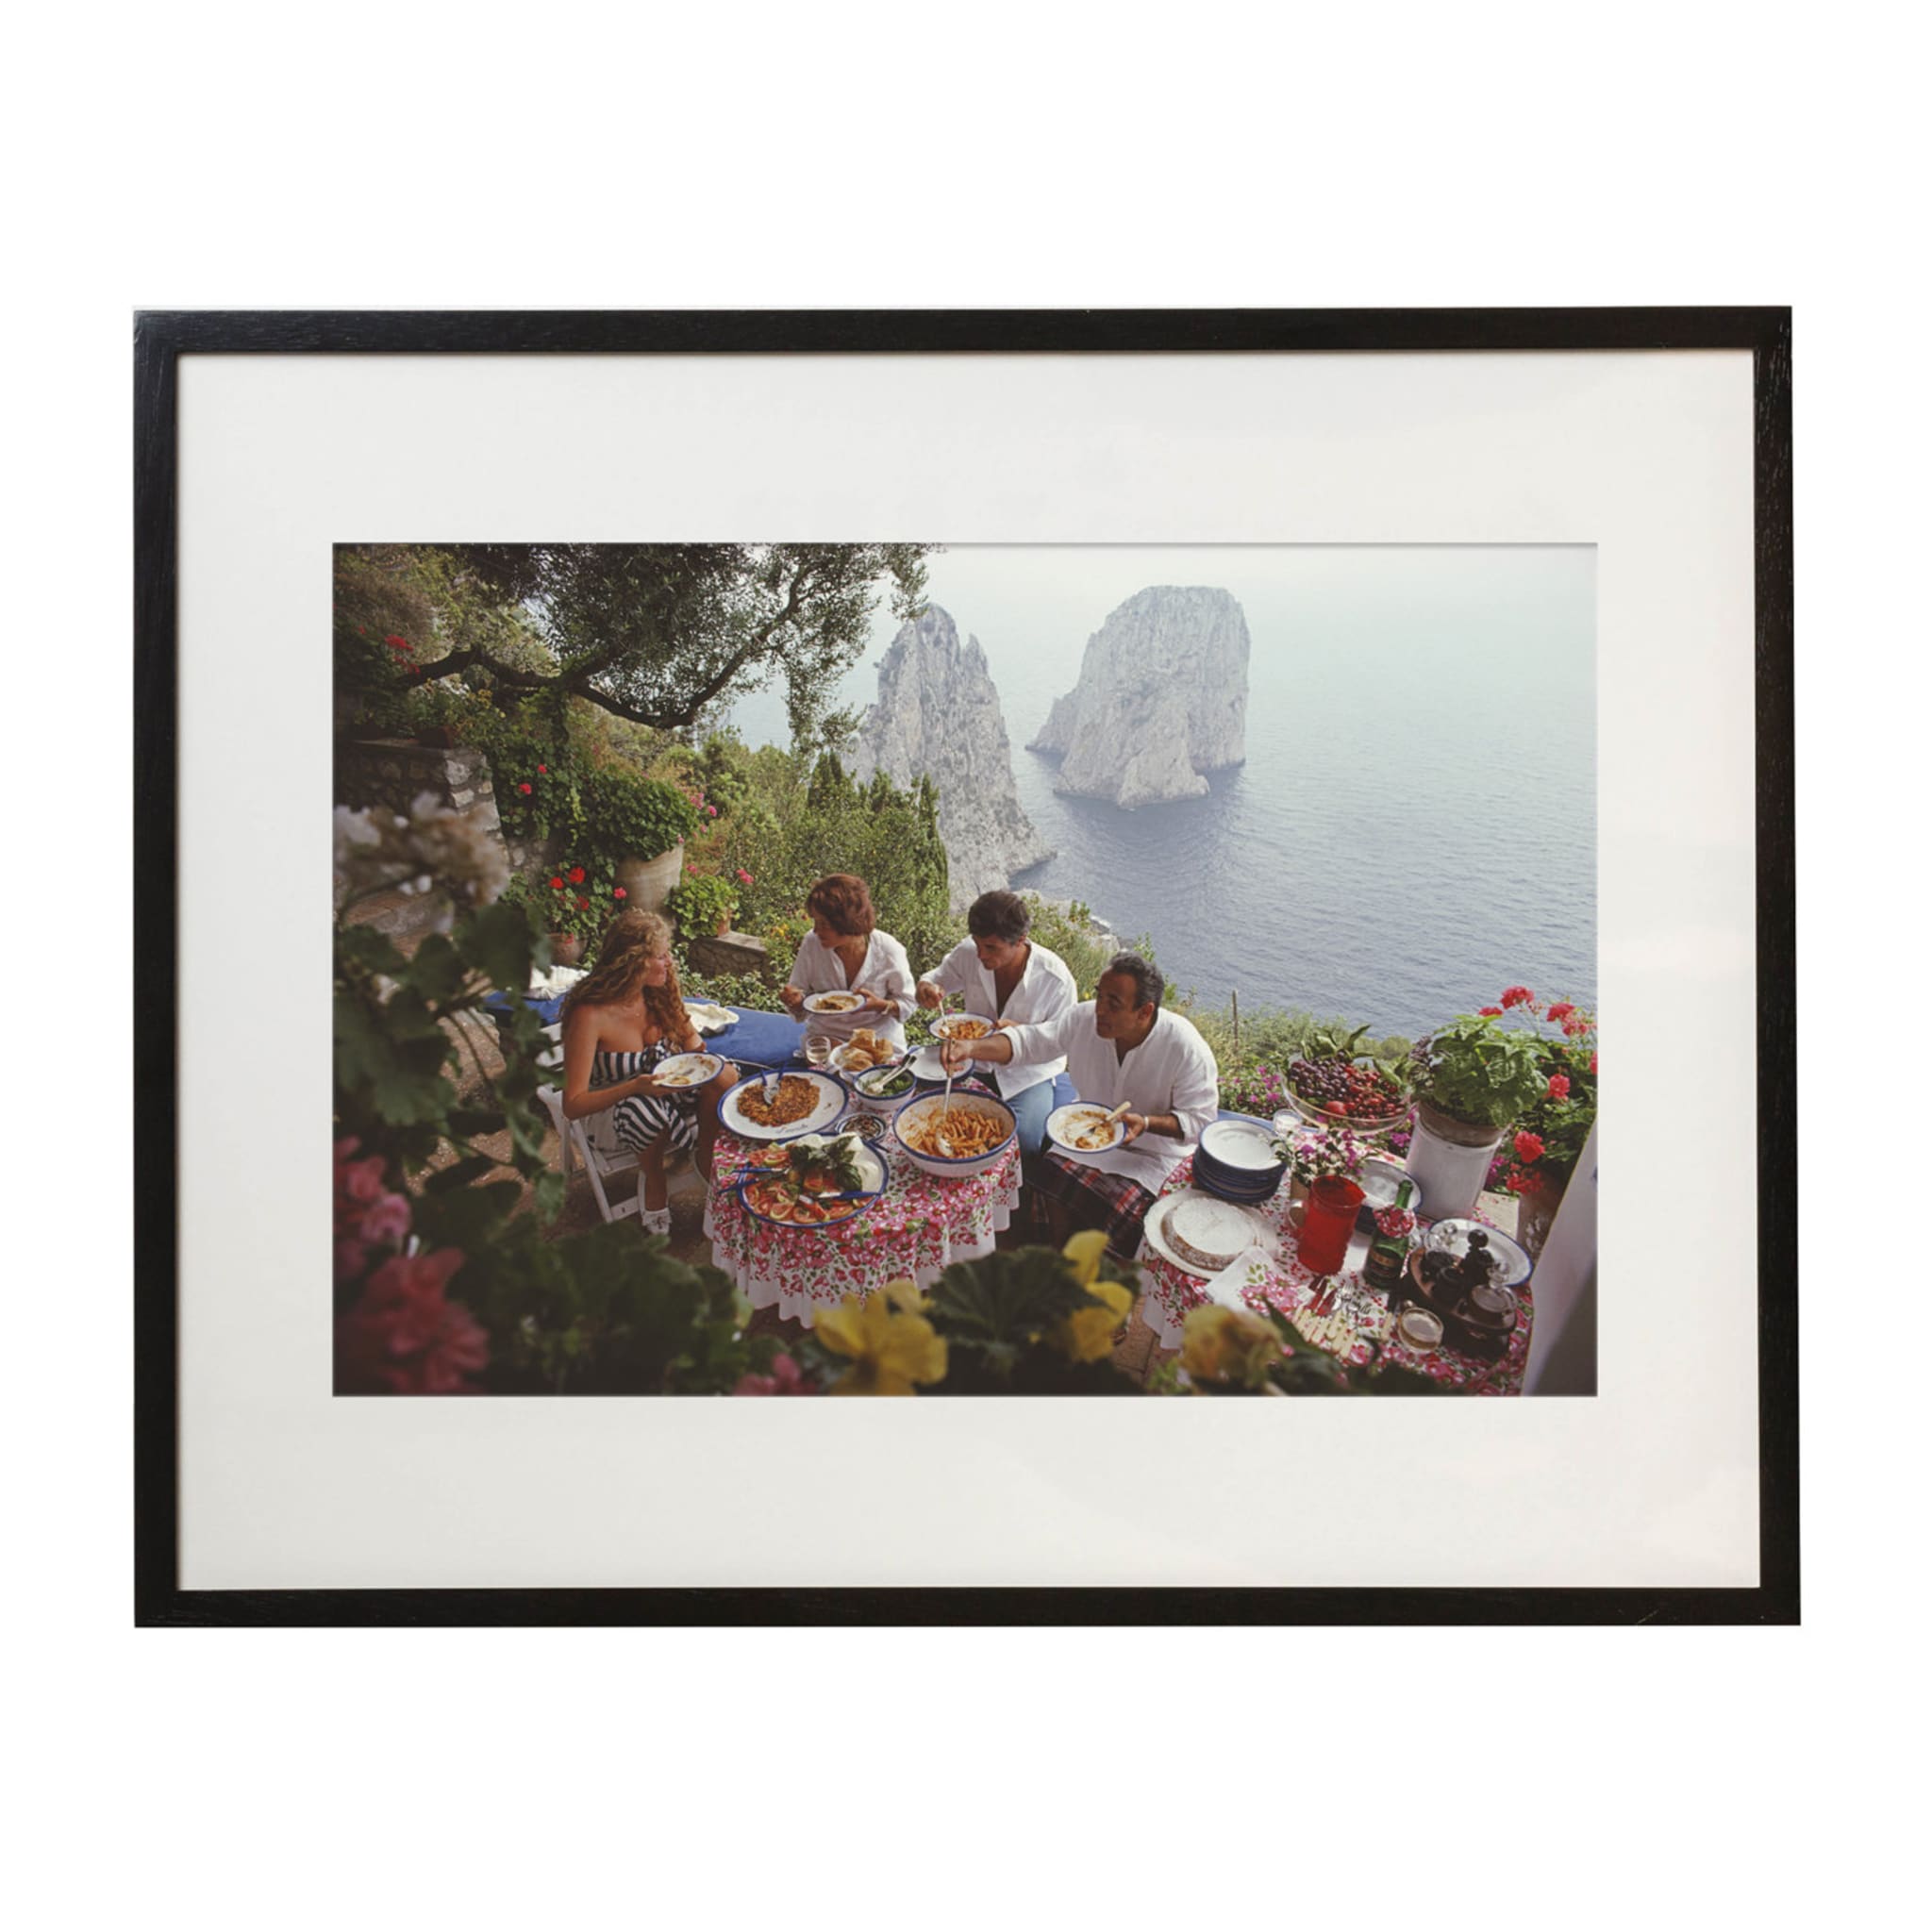 Dining Al Fresco On Capri Framed Print by Slim Aarons - Vista principal